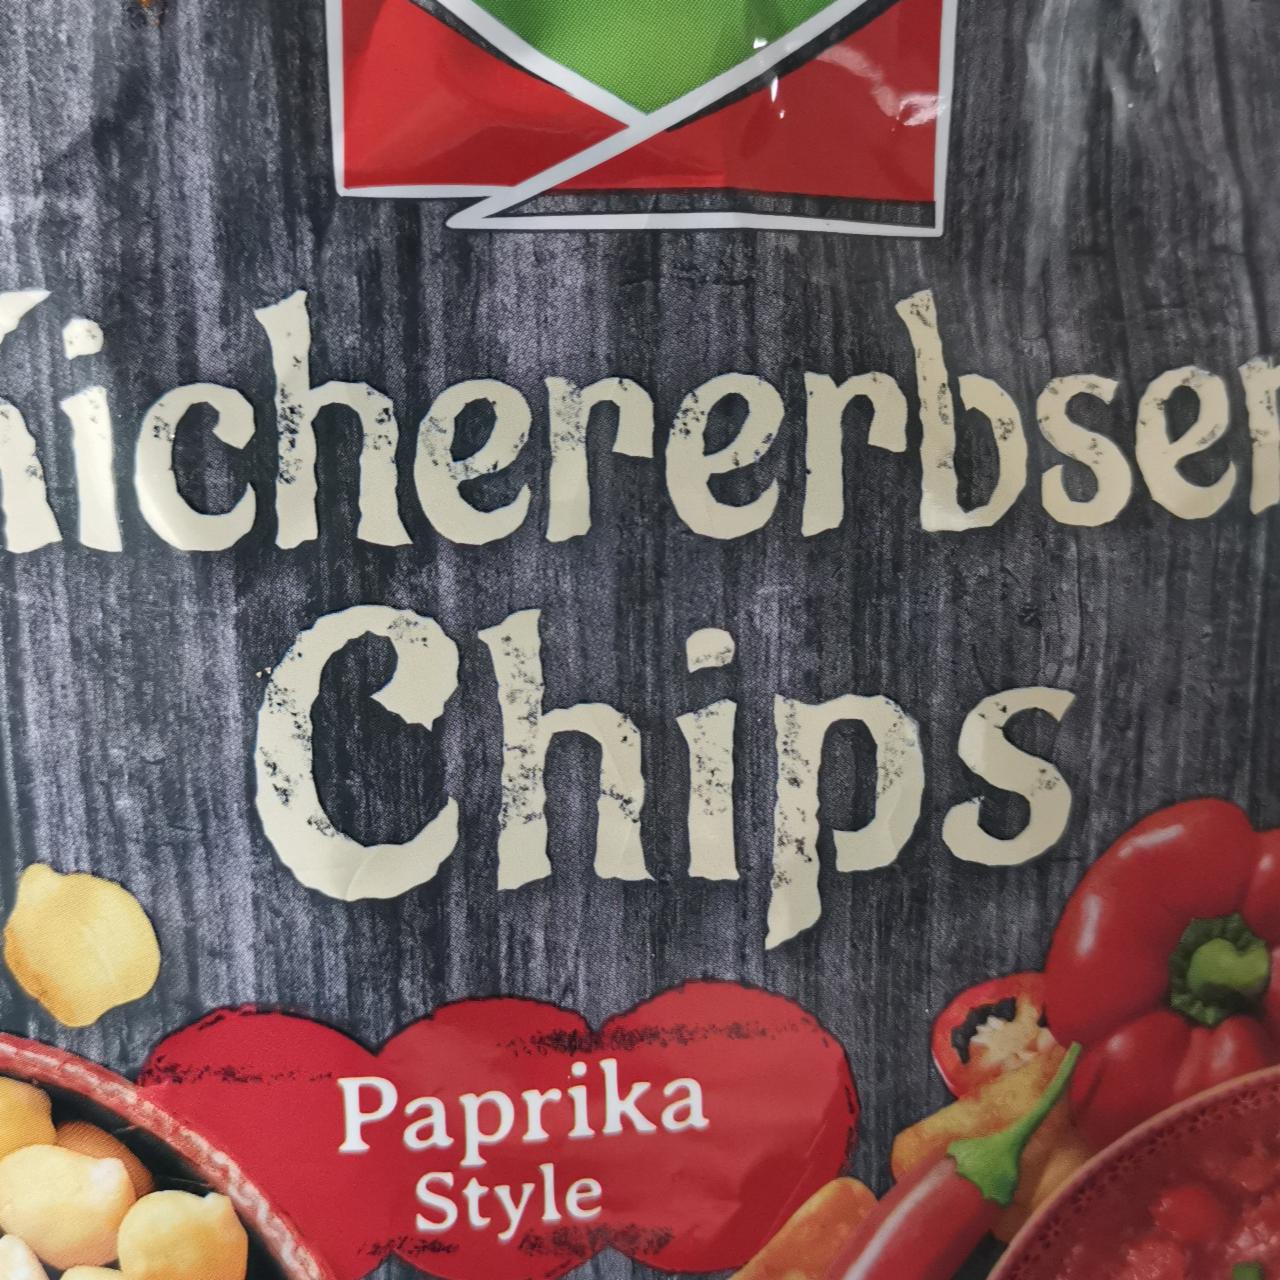 Fotografie - Kichererbsen Chips Paprika style